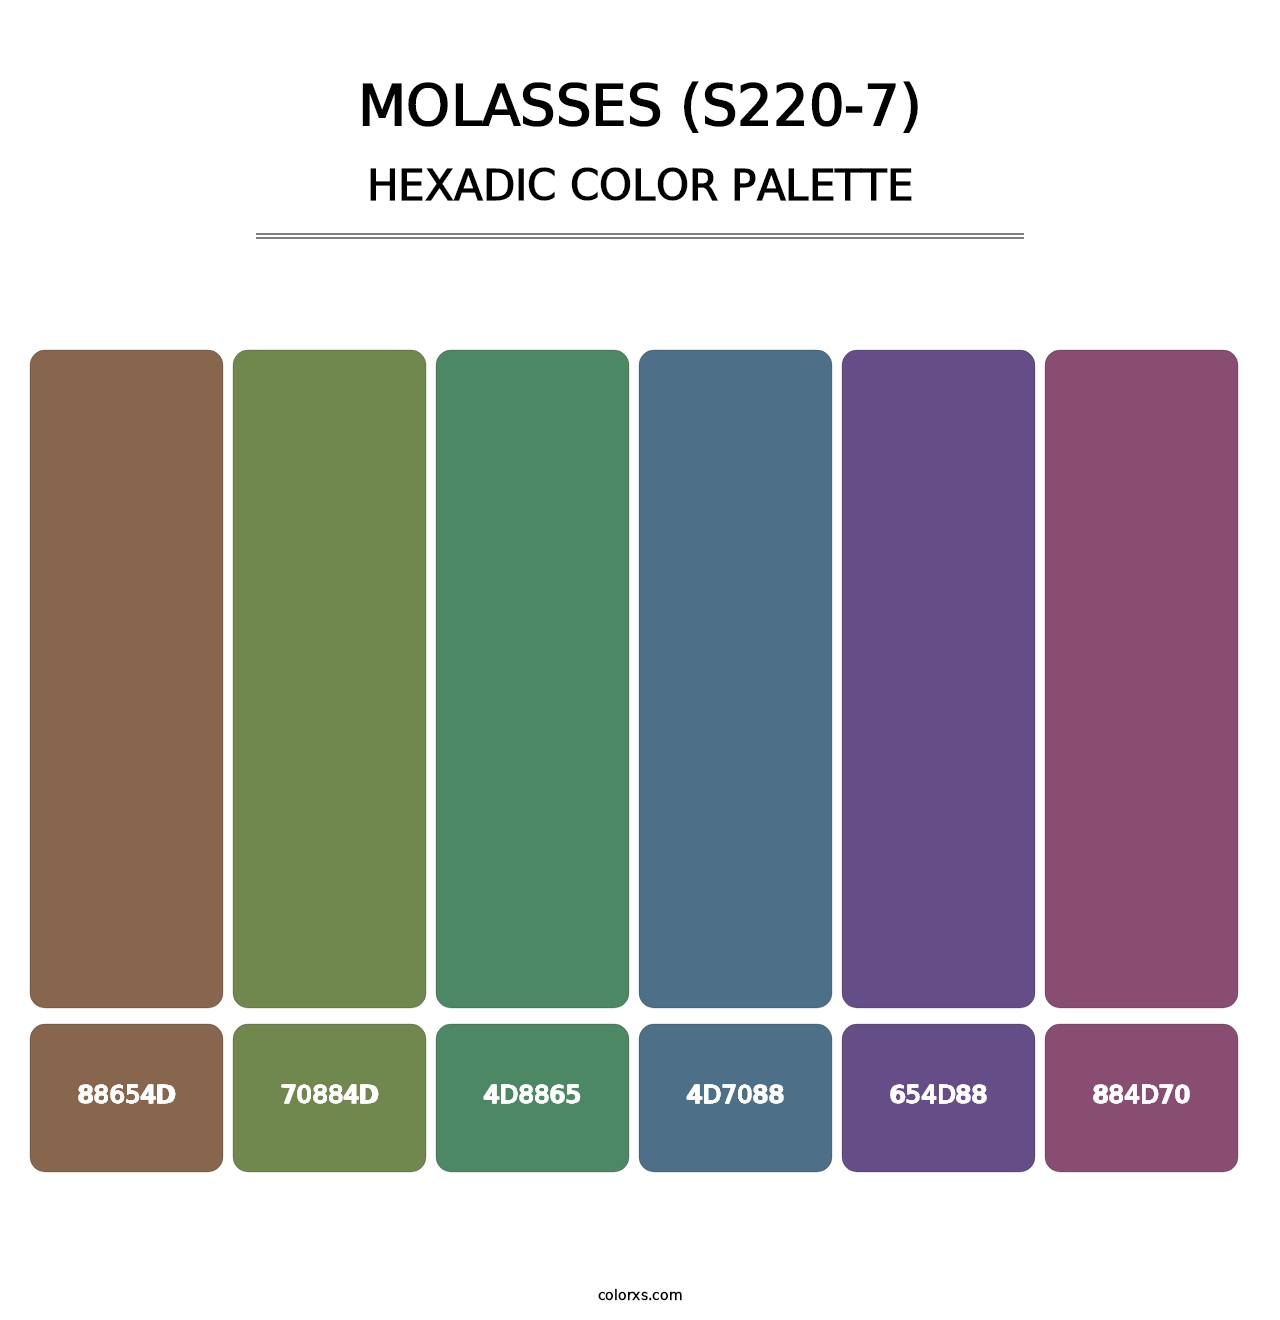 Molasses (S220-7) - Hexadic Color Palette